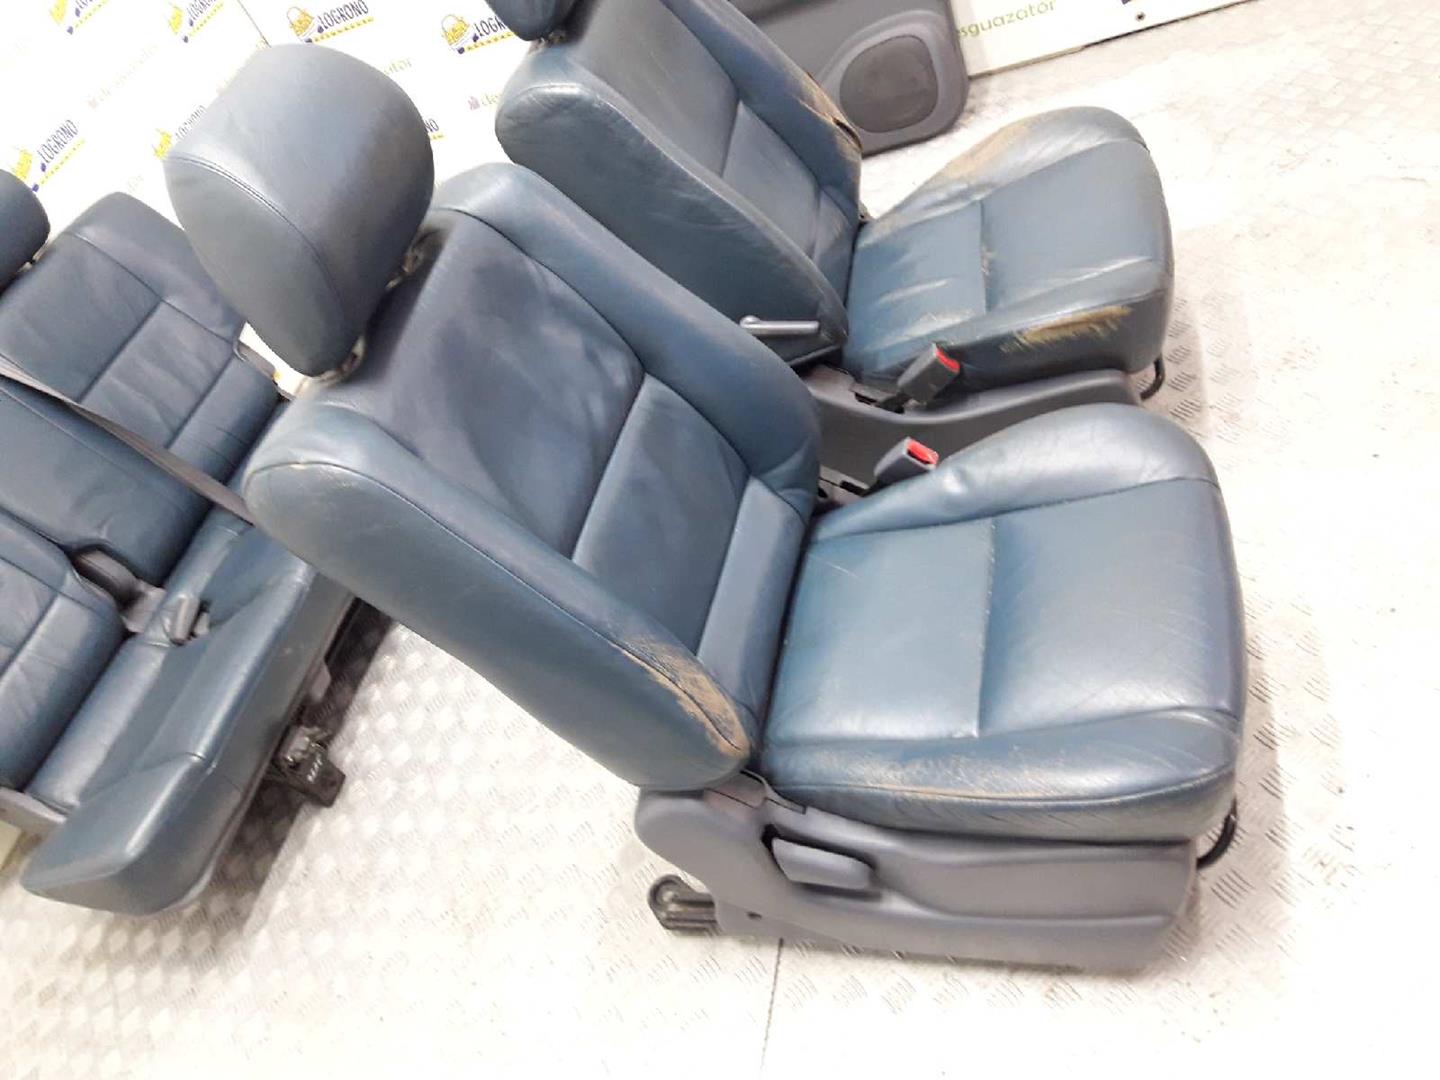 TOYOTA Land Cruiser Prado 90 Series (1996-2002) Seats ASIENTOSDECUERO, COLORAZUL 24549596